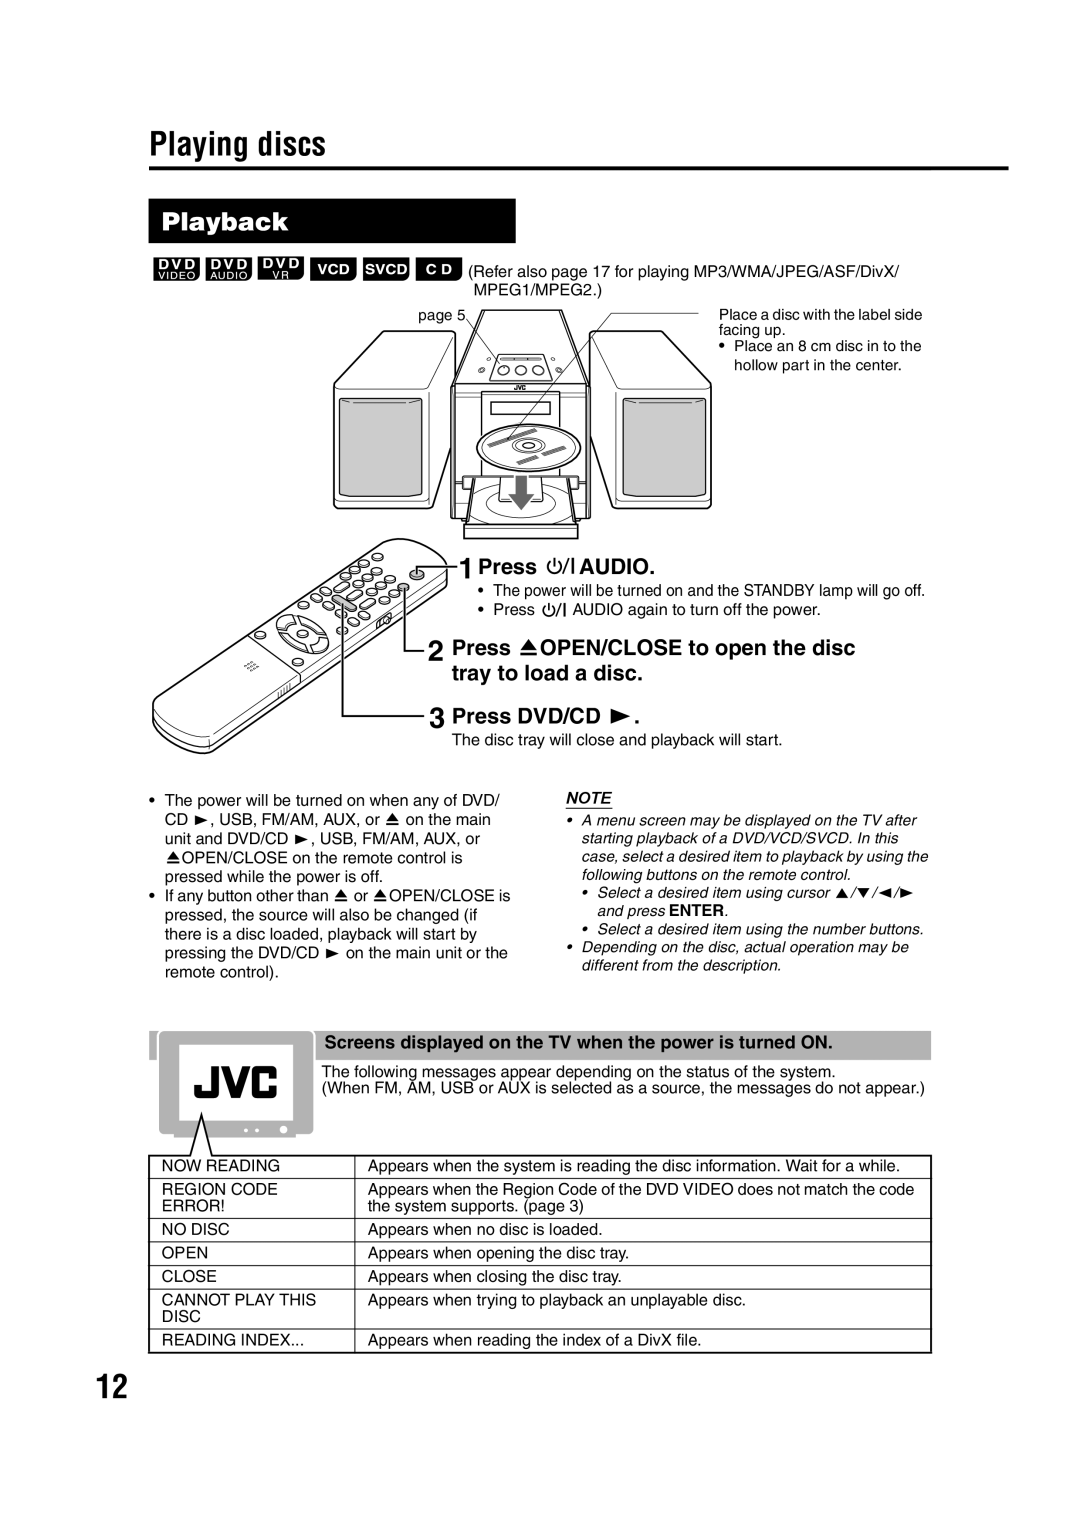 JVC GNT0066-001A manual Playing discs, Playback, Press AUDIO, Press DVD/CD, MPEG1/MPEG2 